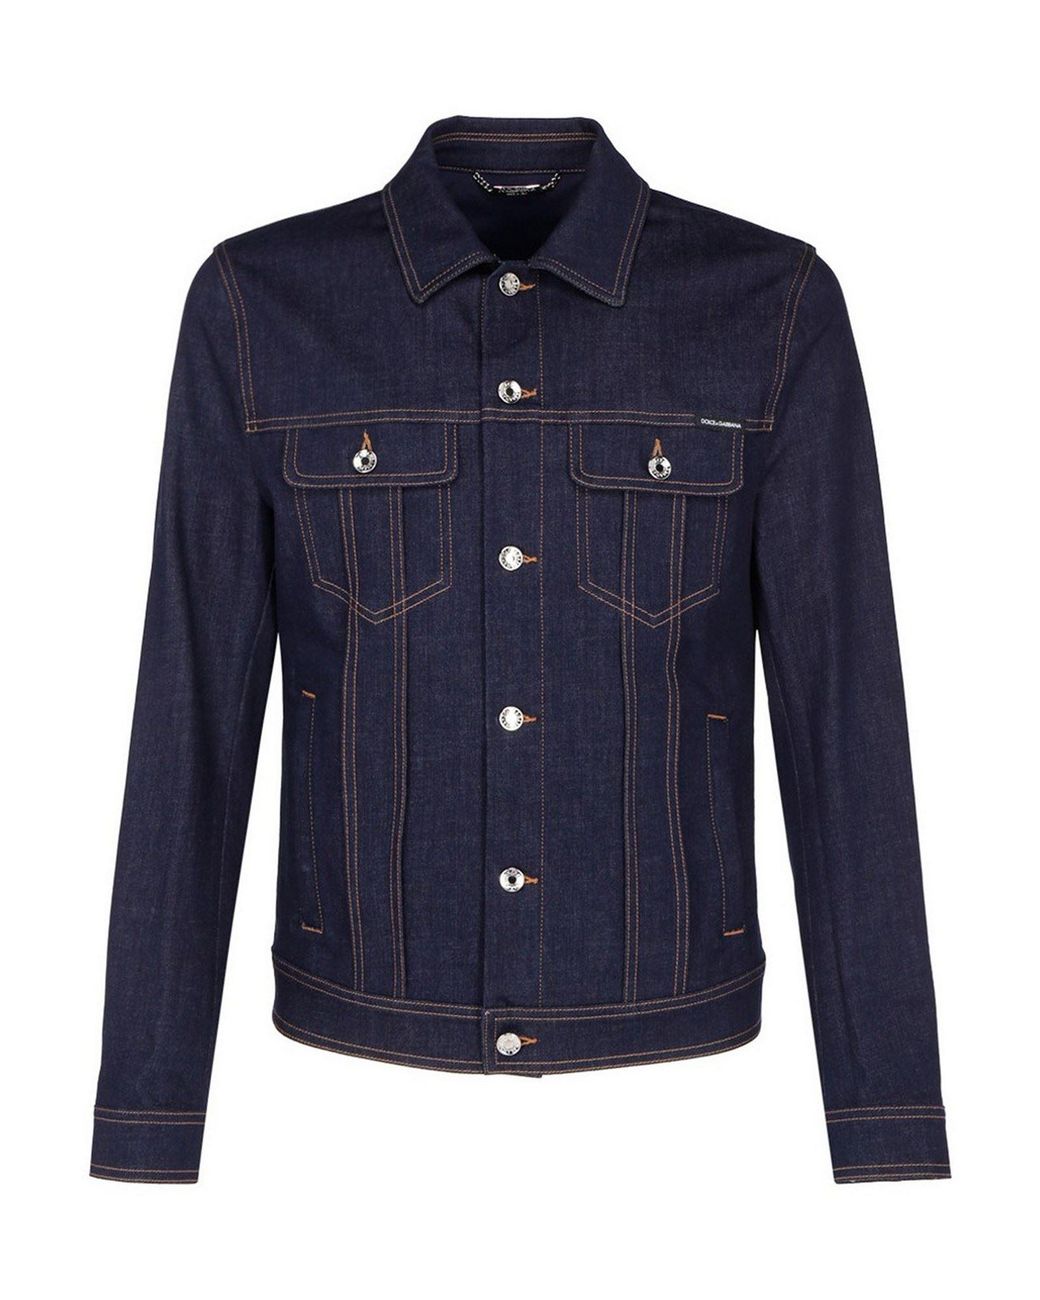 Dolce & Gabbana Denim Jacket in Blue for Men - Lyst